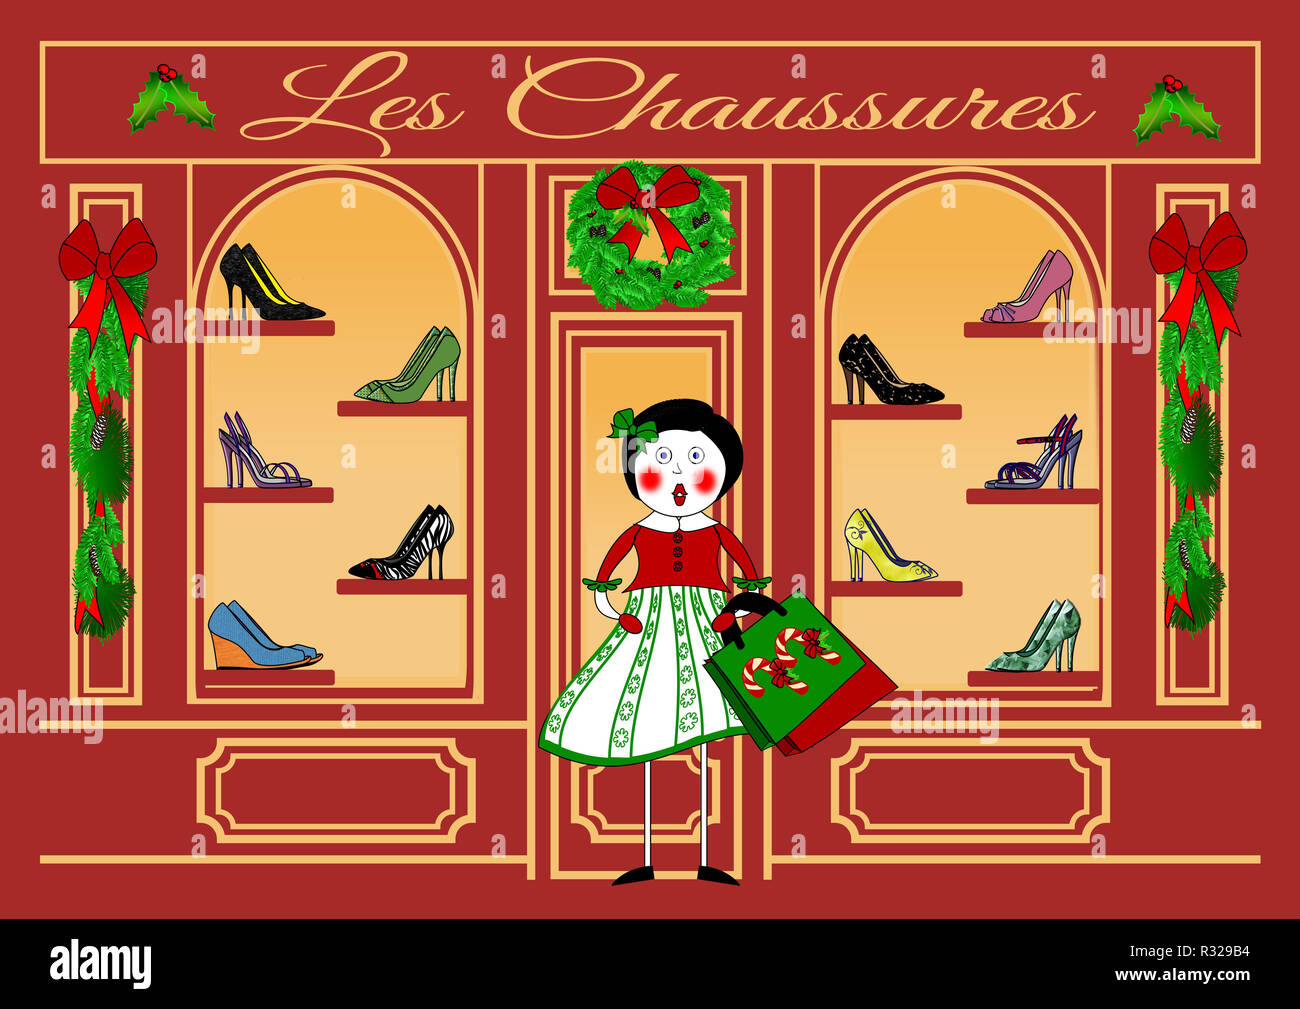 Christmas Shopping im Les Chaussures Stockfoto